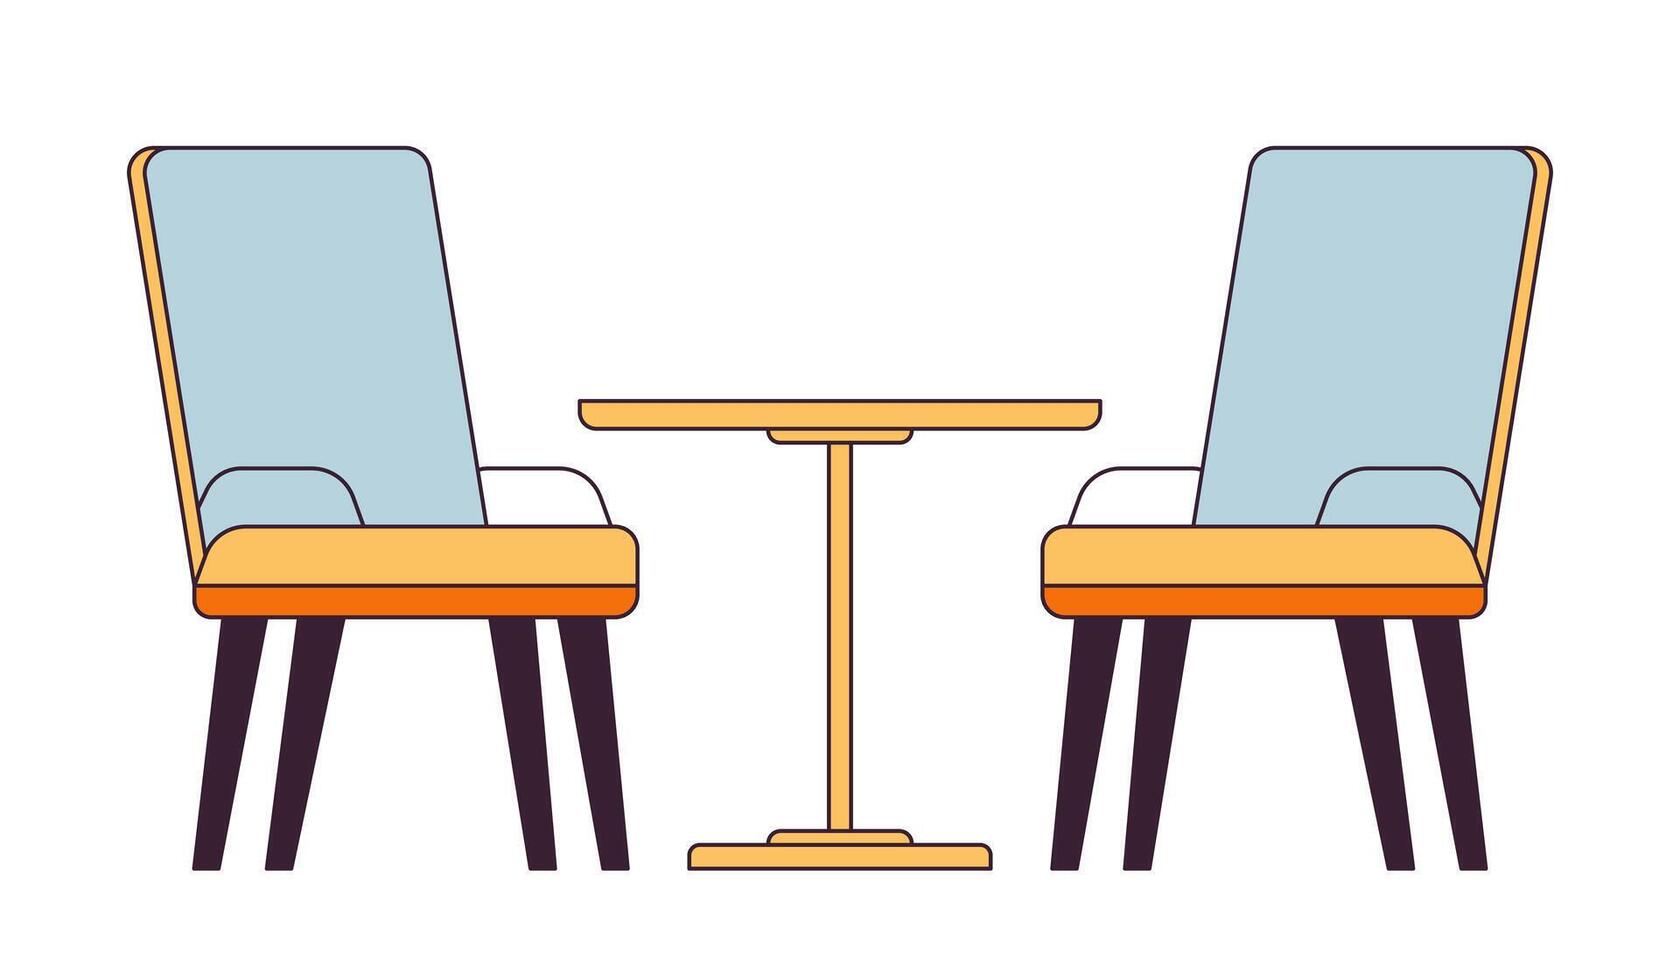 dos sillas alrededor mesa 2d lineal dibujos animados objeto. cafetería sillones aislado línea vector elemento blanco antecedentes. patio café interior mueble salón sentado color plano Mancha ilustración